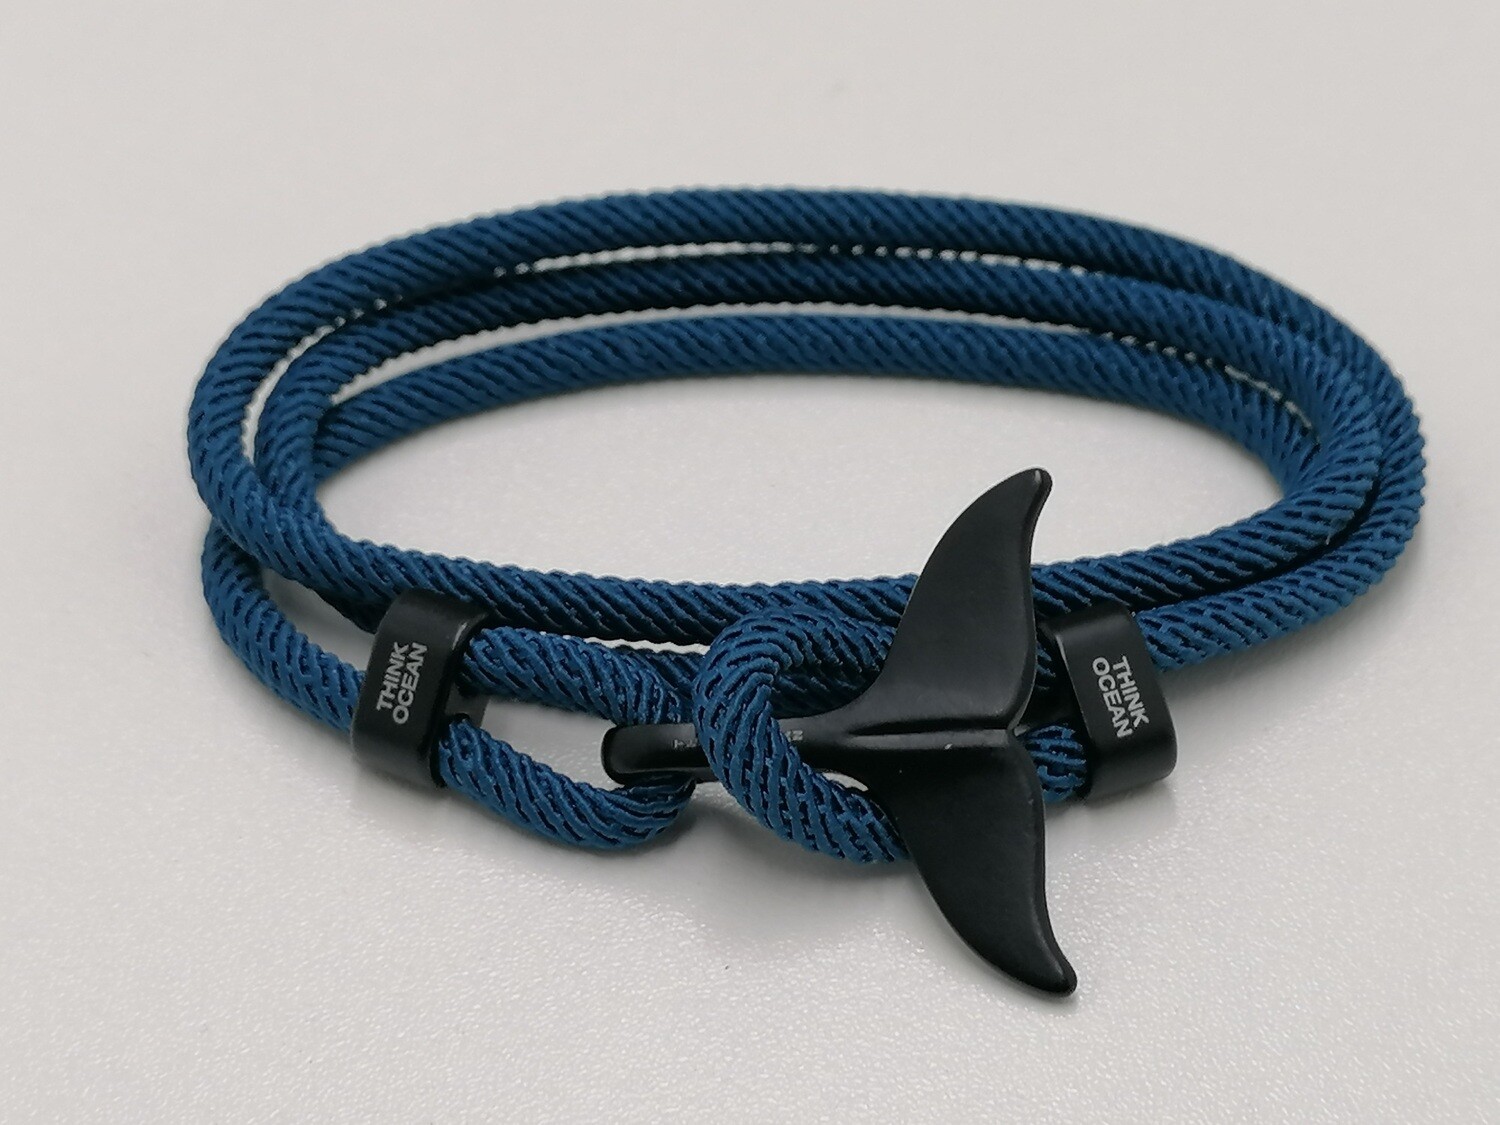 Think Ocean Original Blue Bracelet